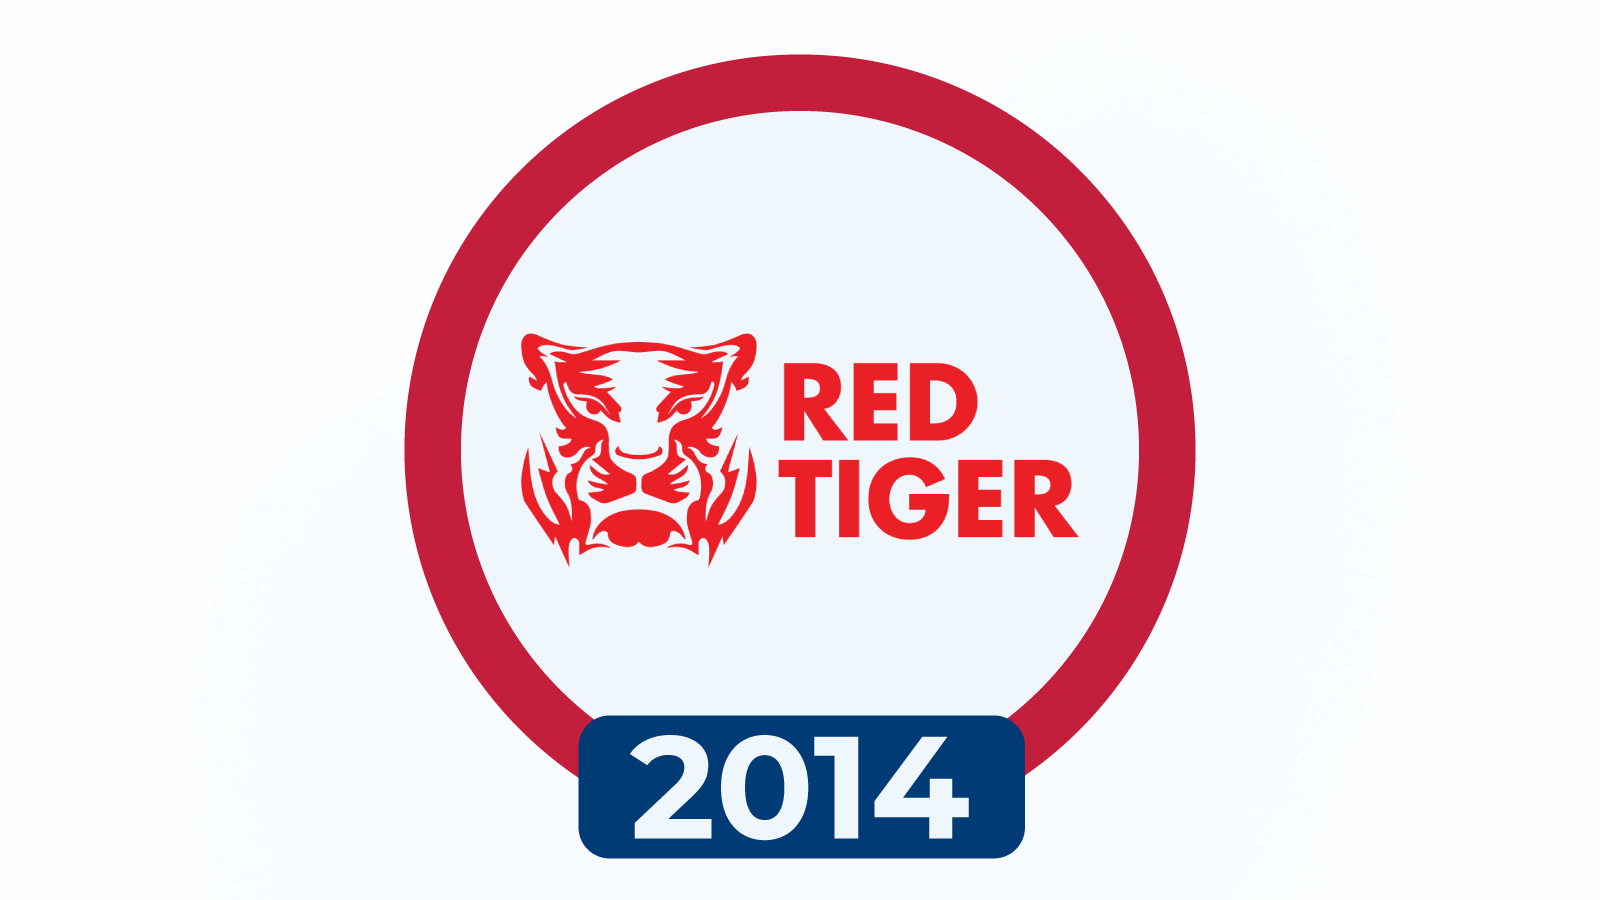 When was Red Tiger Established